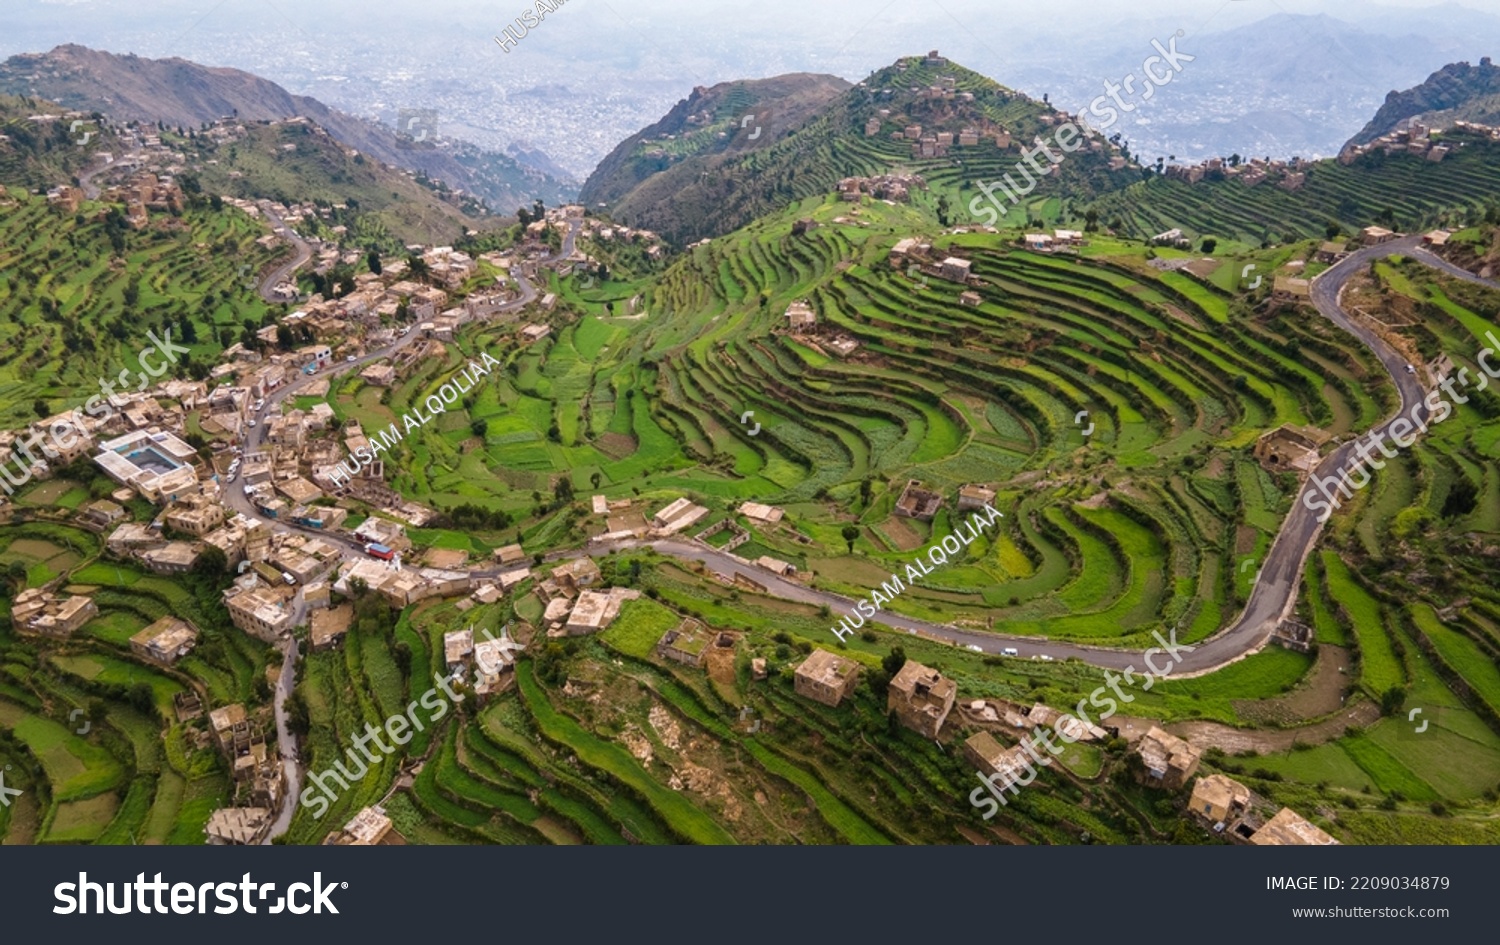 An aerial view of the Yemeni landscape of Jabal Sabr in Taiz city. The beauty of Yemen. Yemeni Tourism #2209034879